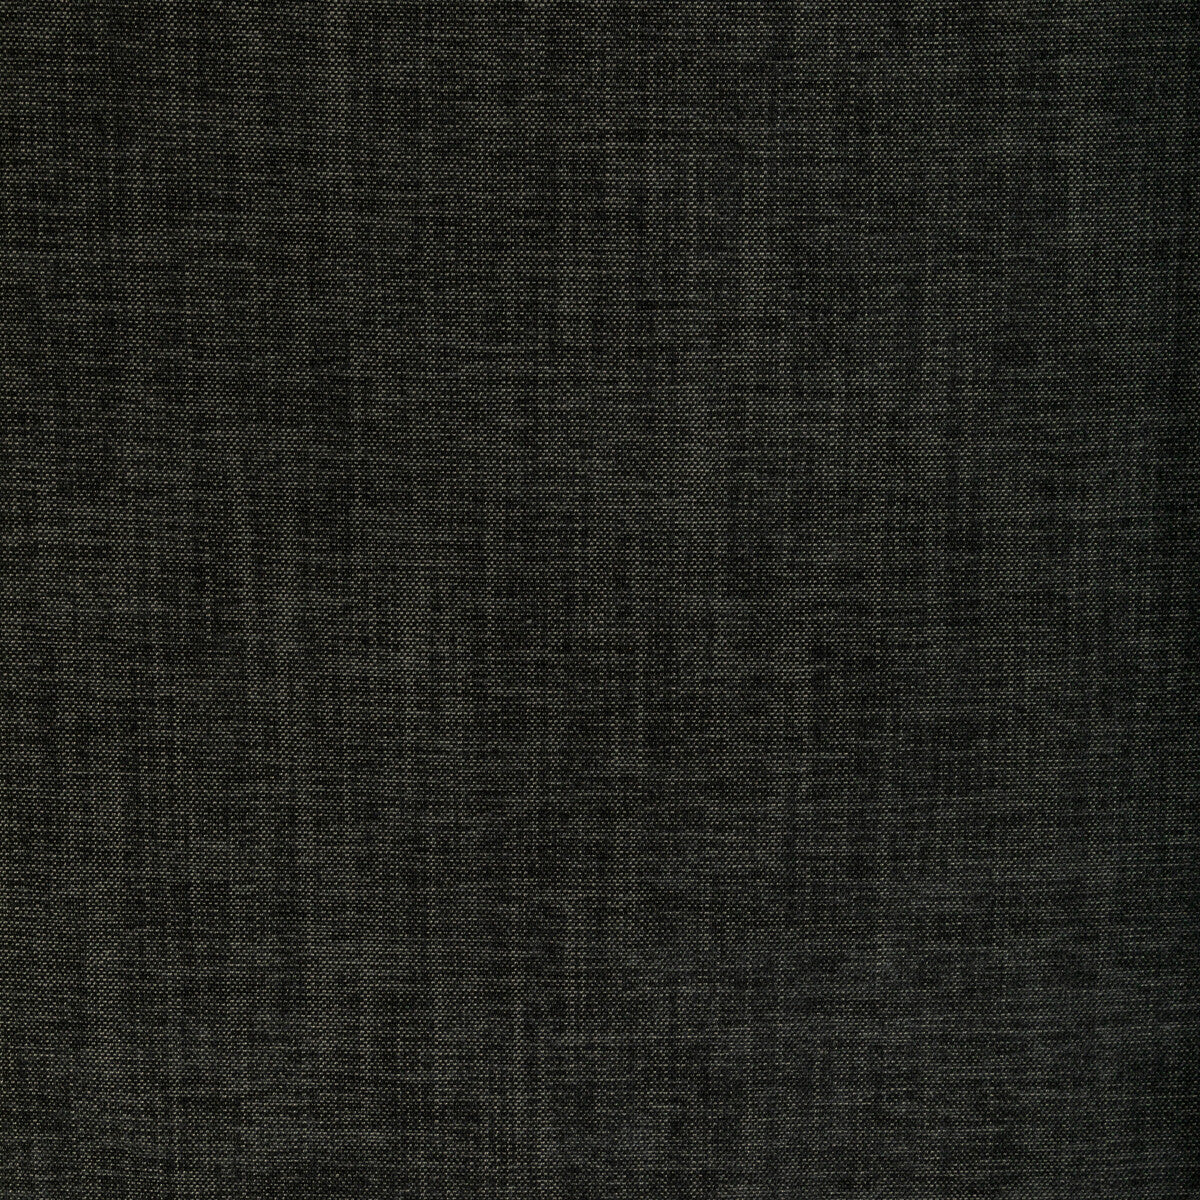 Kravet Smart fabric in 36650-2121 color - pattern 36650.2121.0 - by Kravet Smart in the Performance Kravetarmor collection